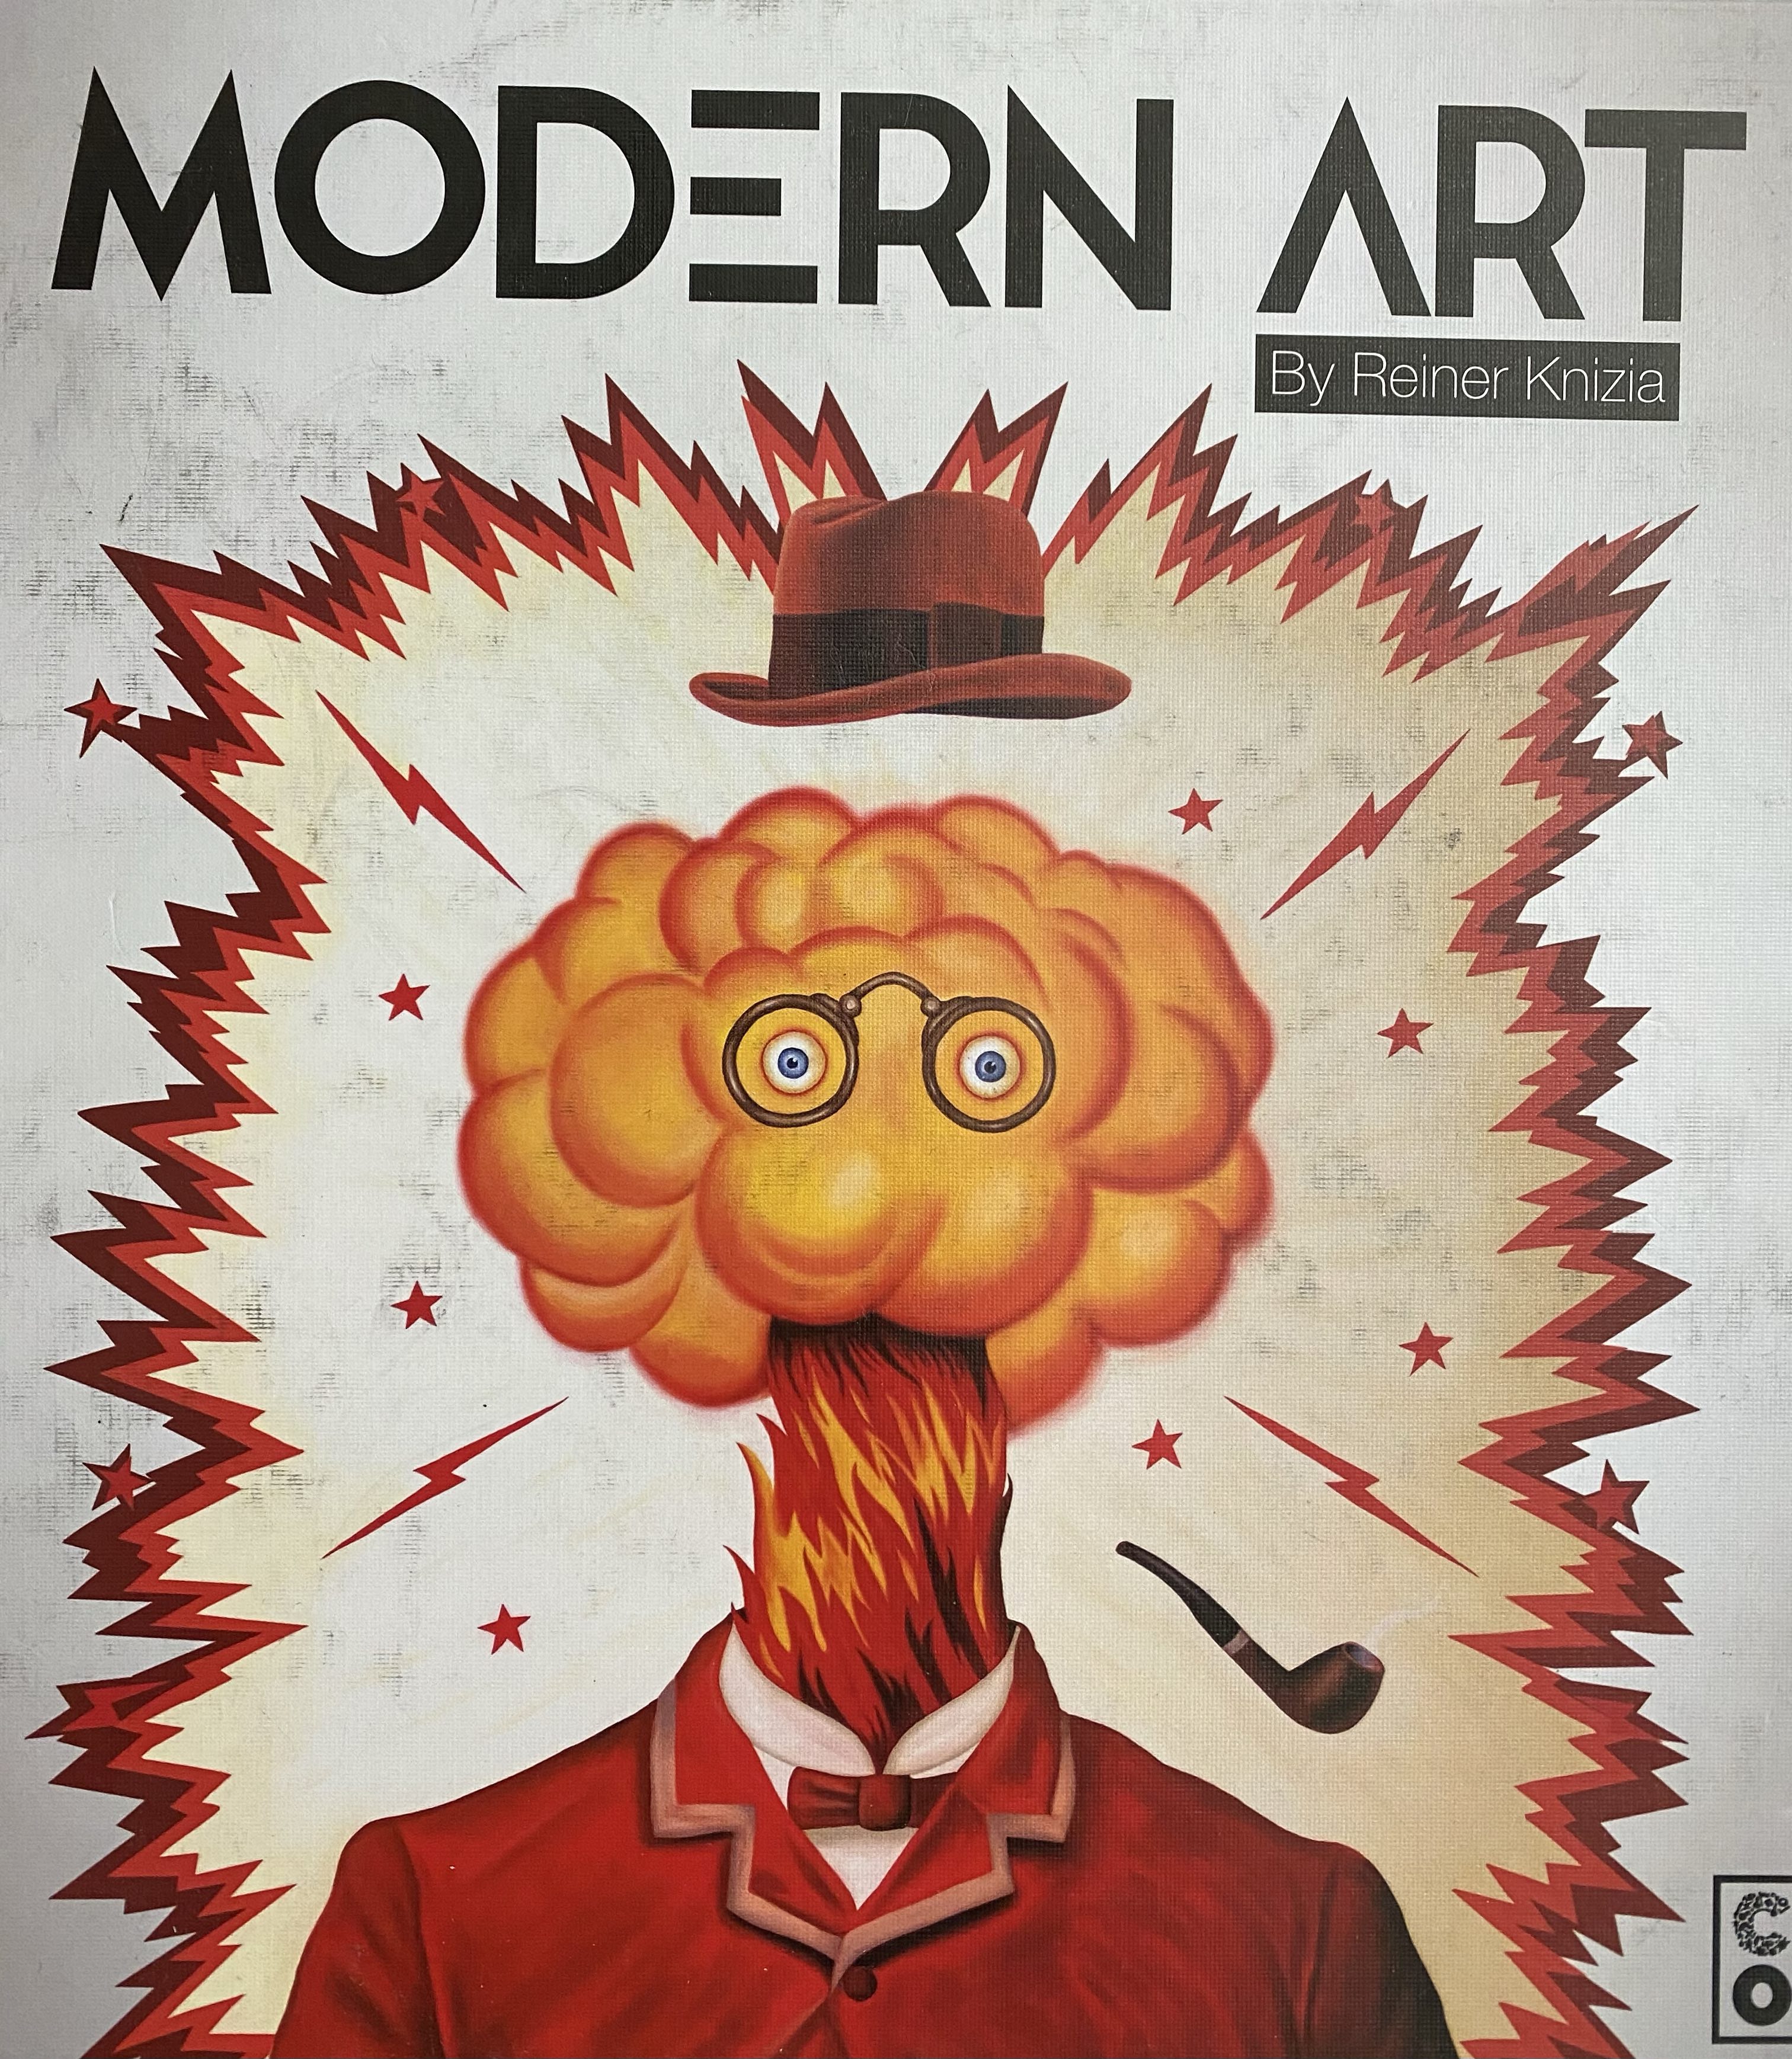 The Modern Art Box Cover